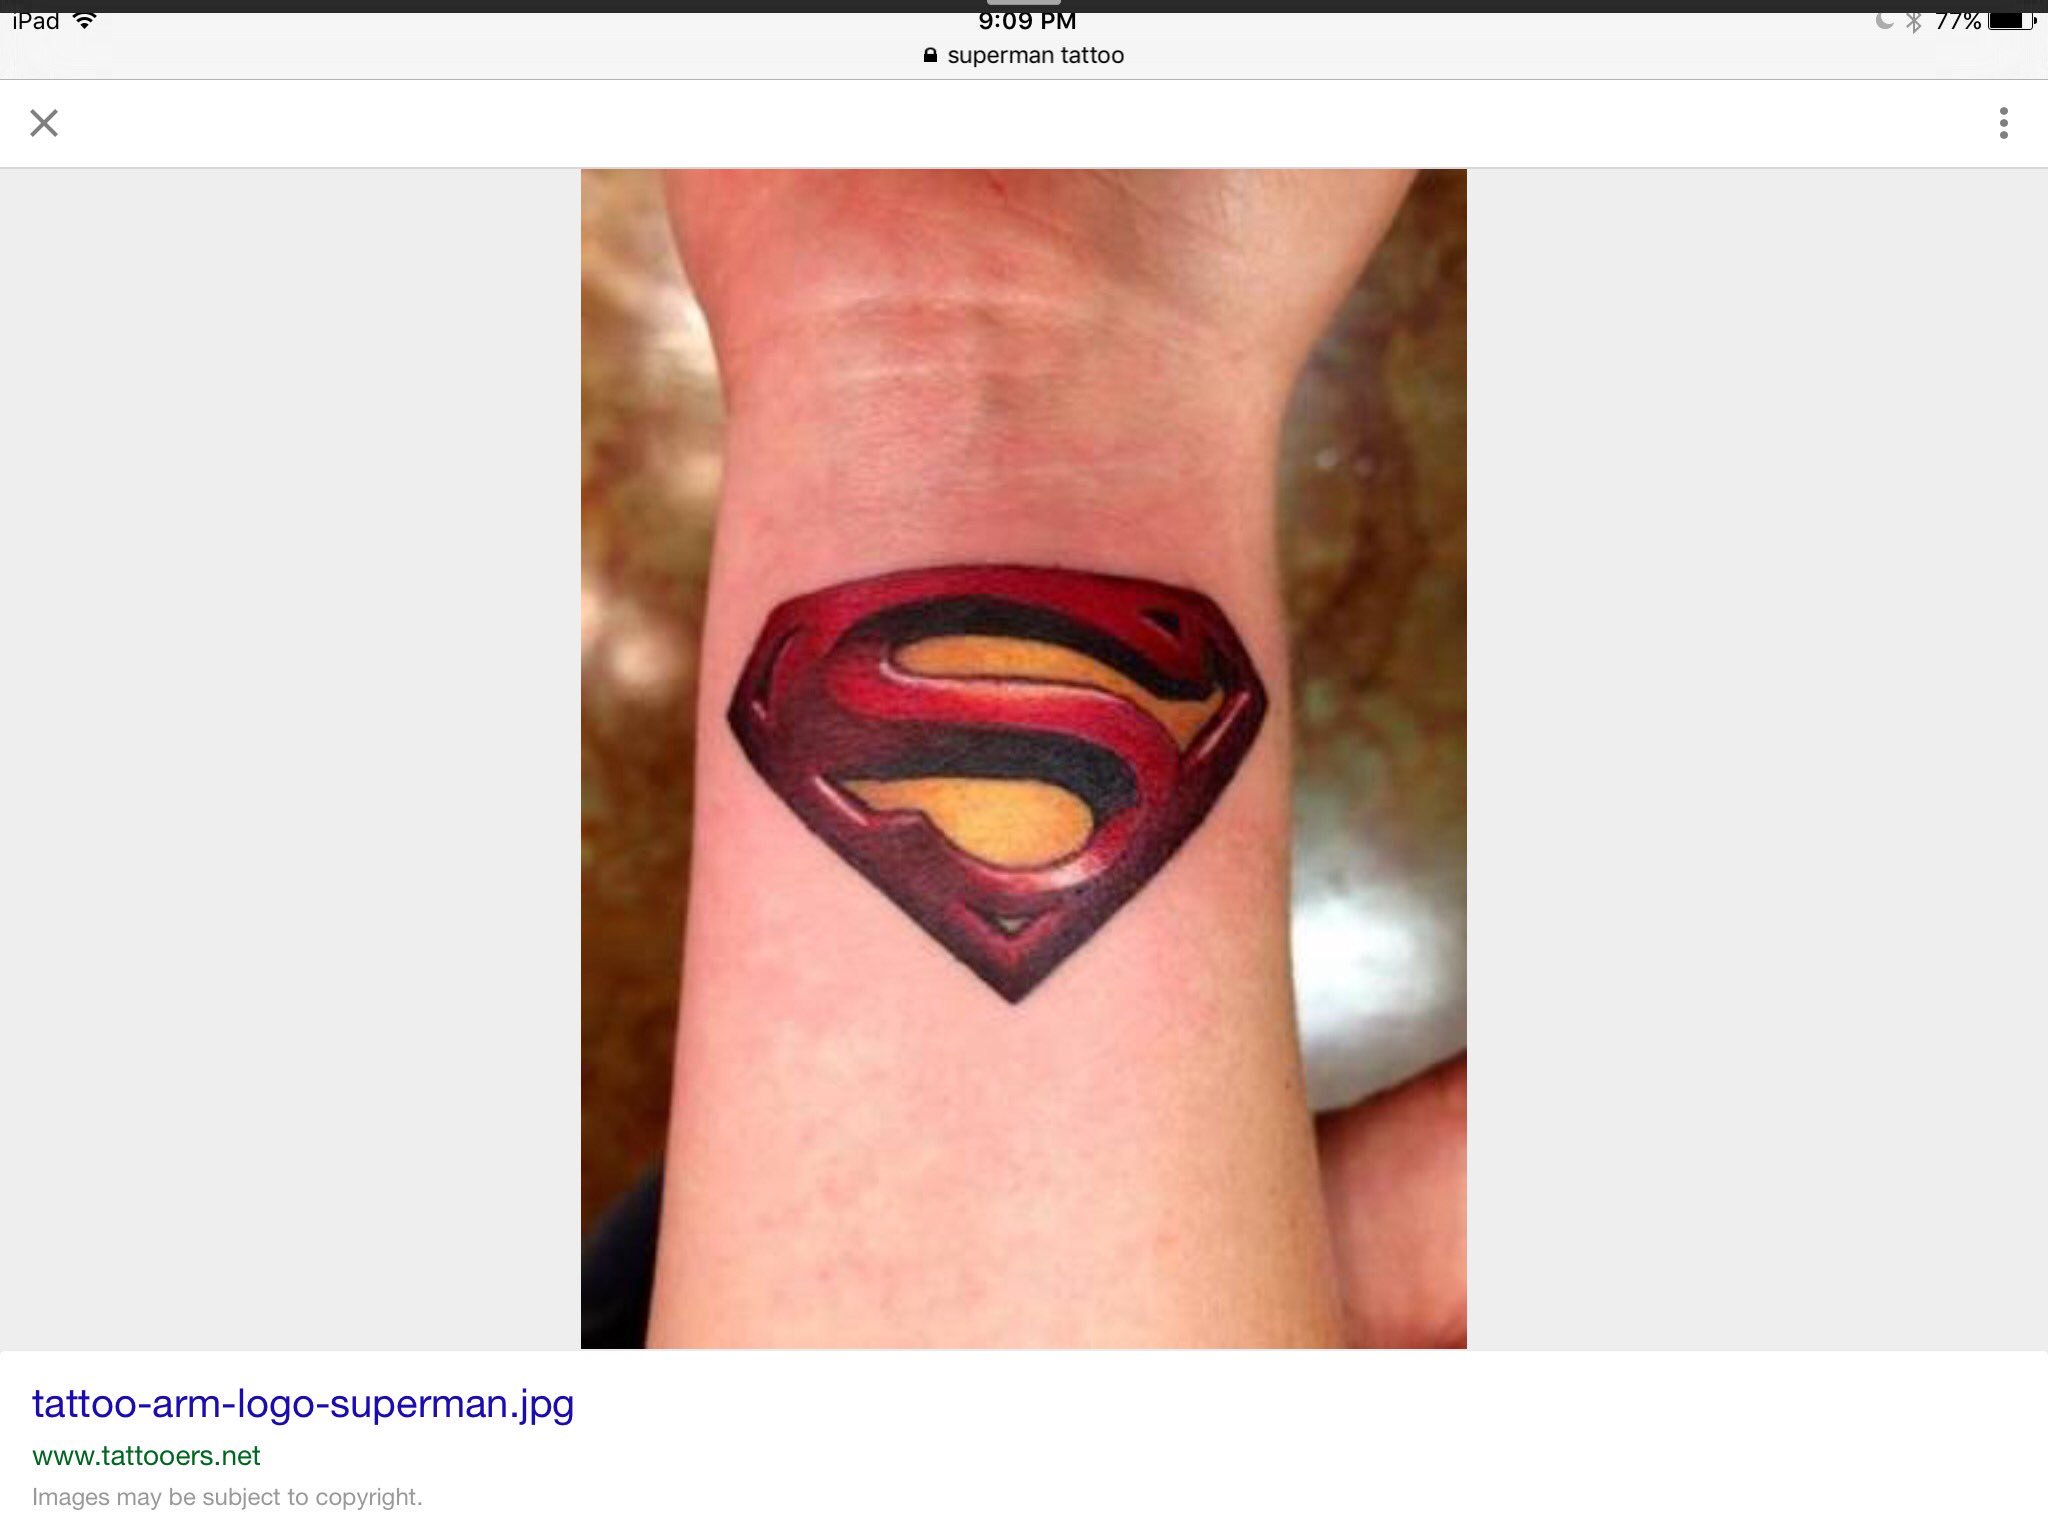 Daddy Jacks Body Art Studio : Tattoos : New : Superman Symbol by Mario